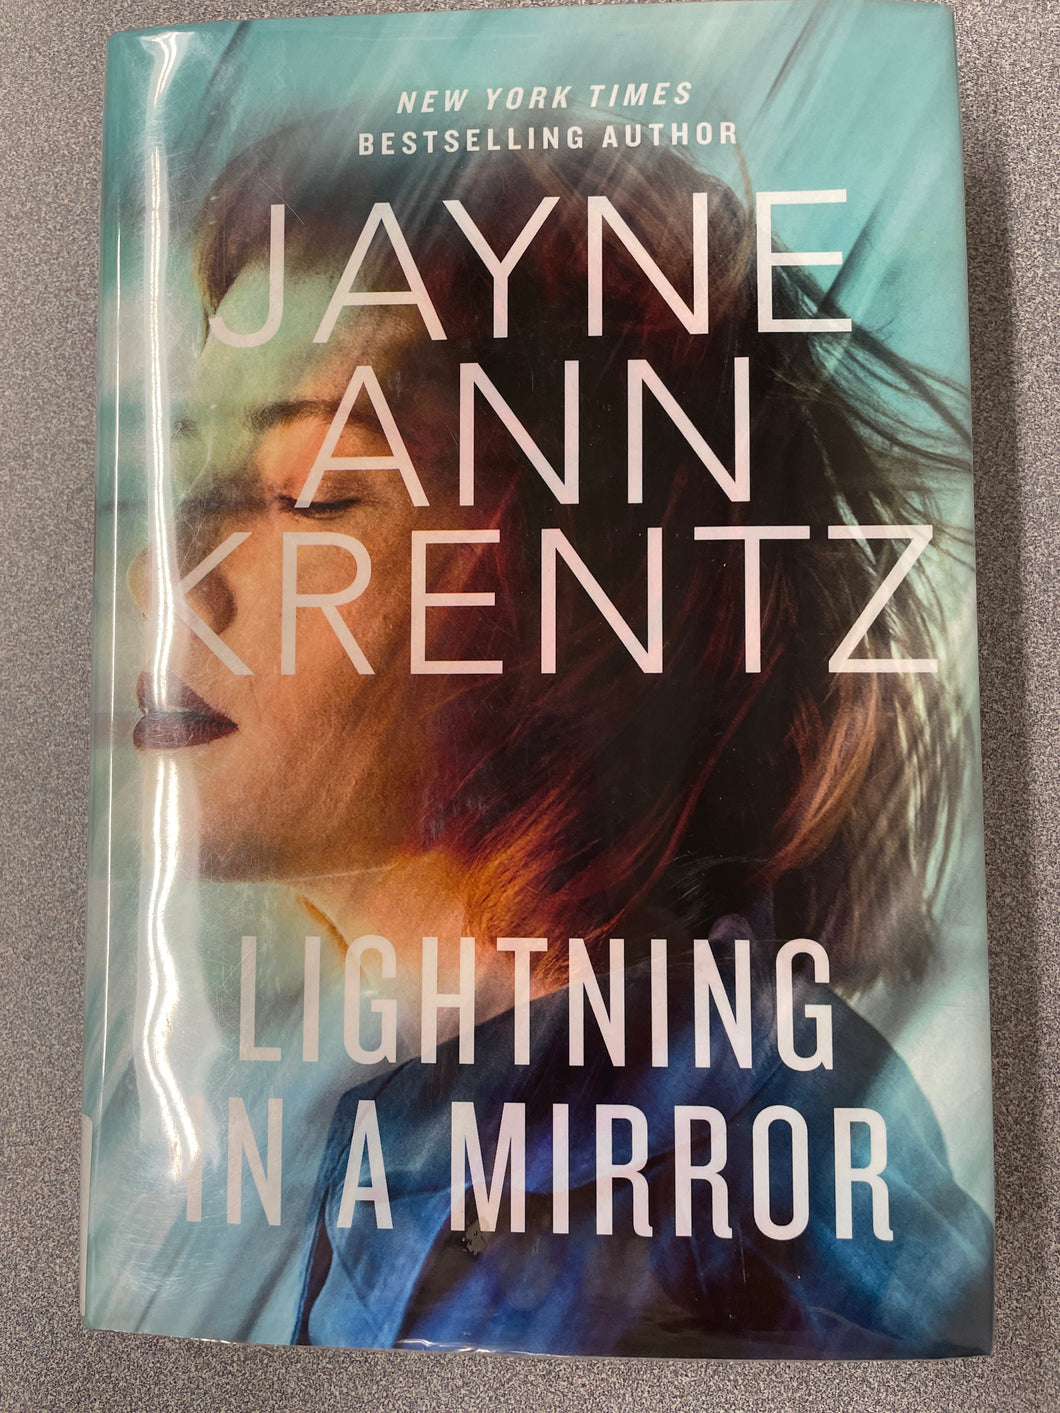 Krentz, Jayne Ann, Lightning In a Mirror [2022] RBS 1/24